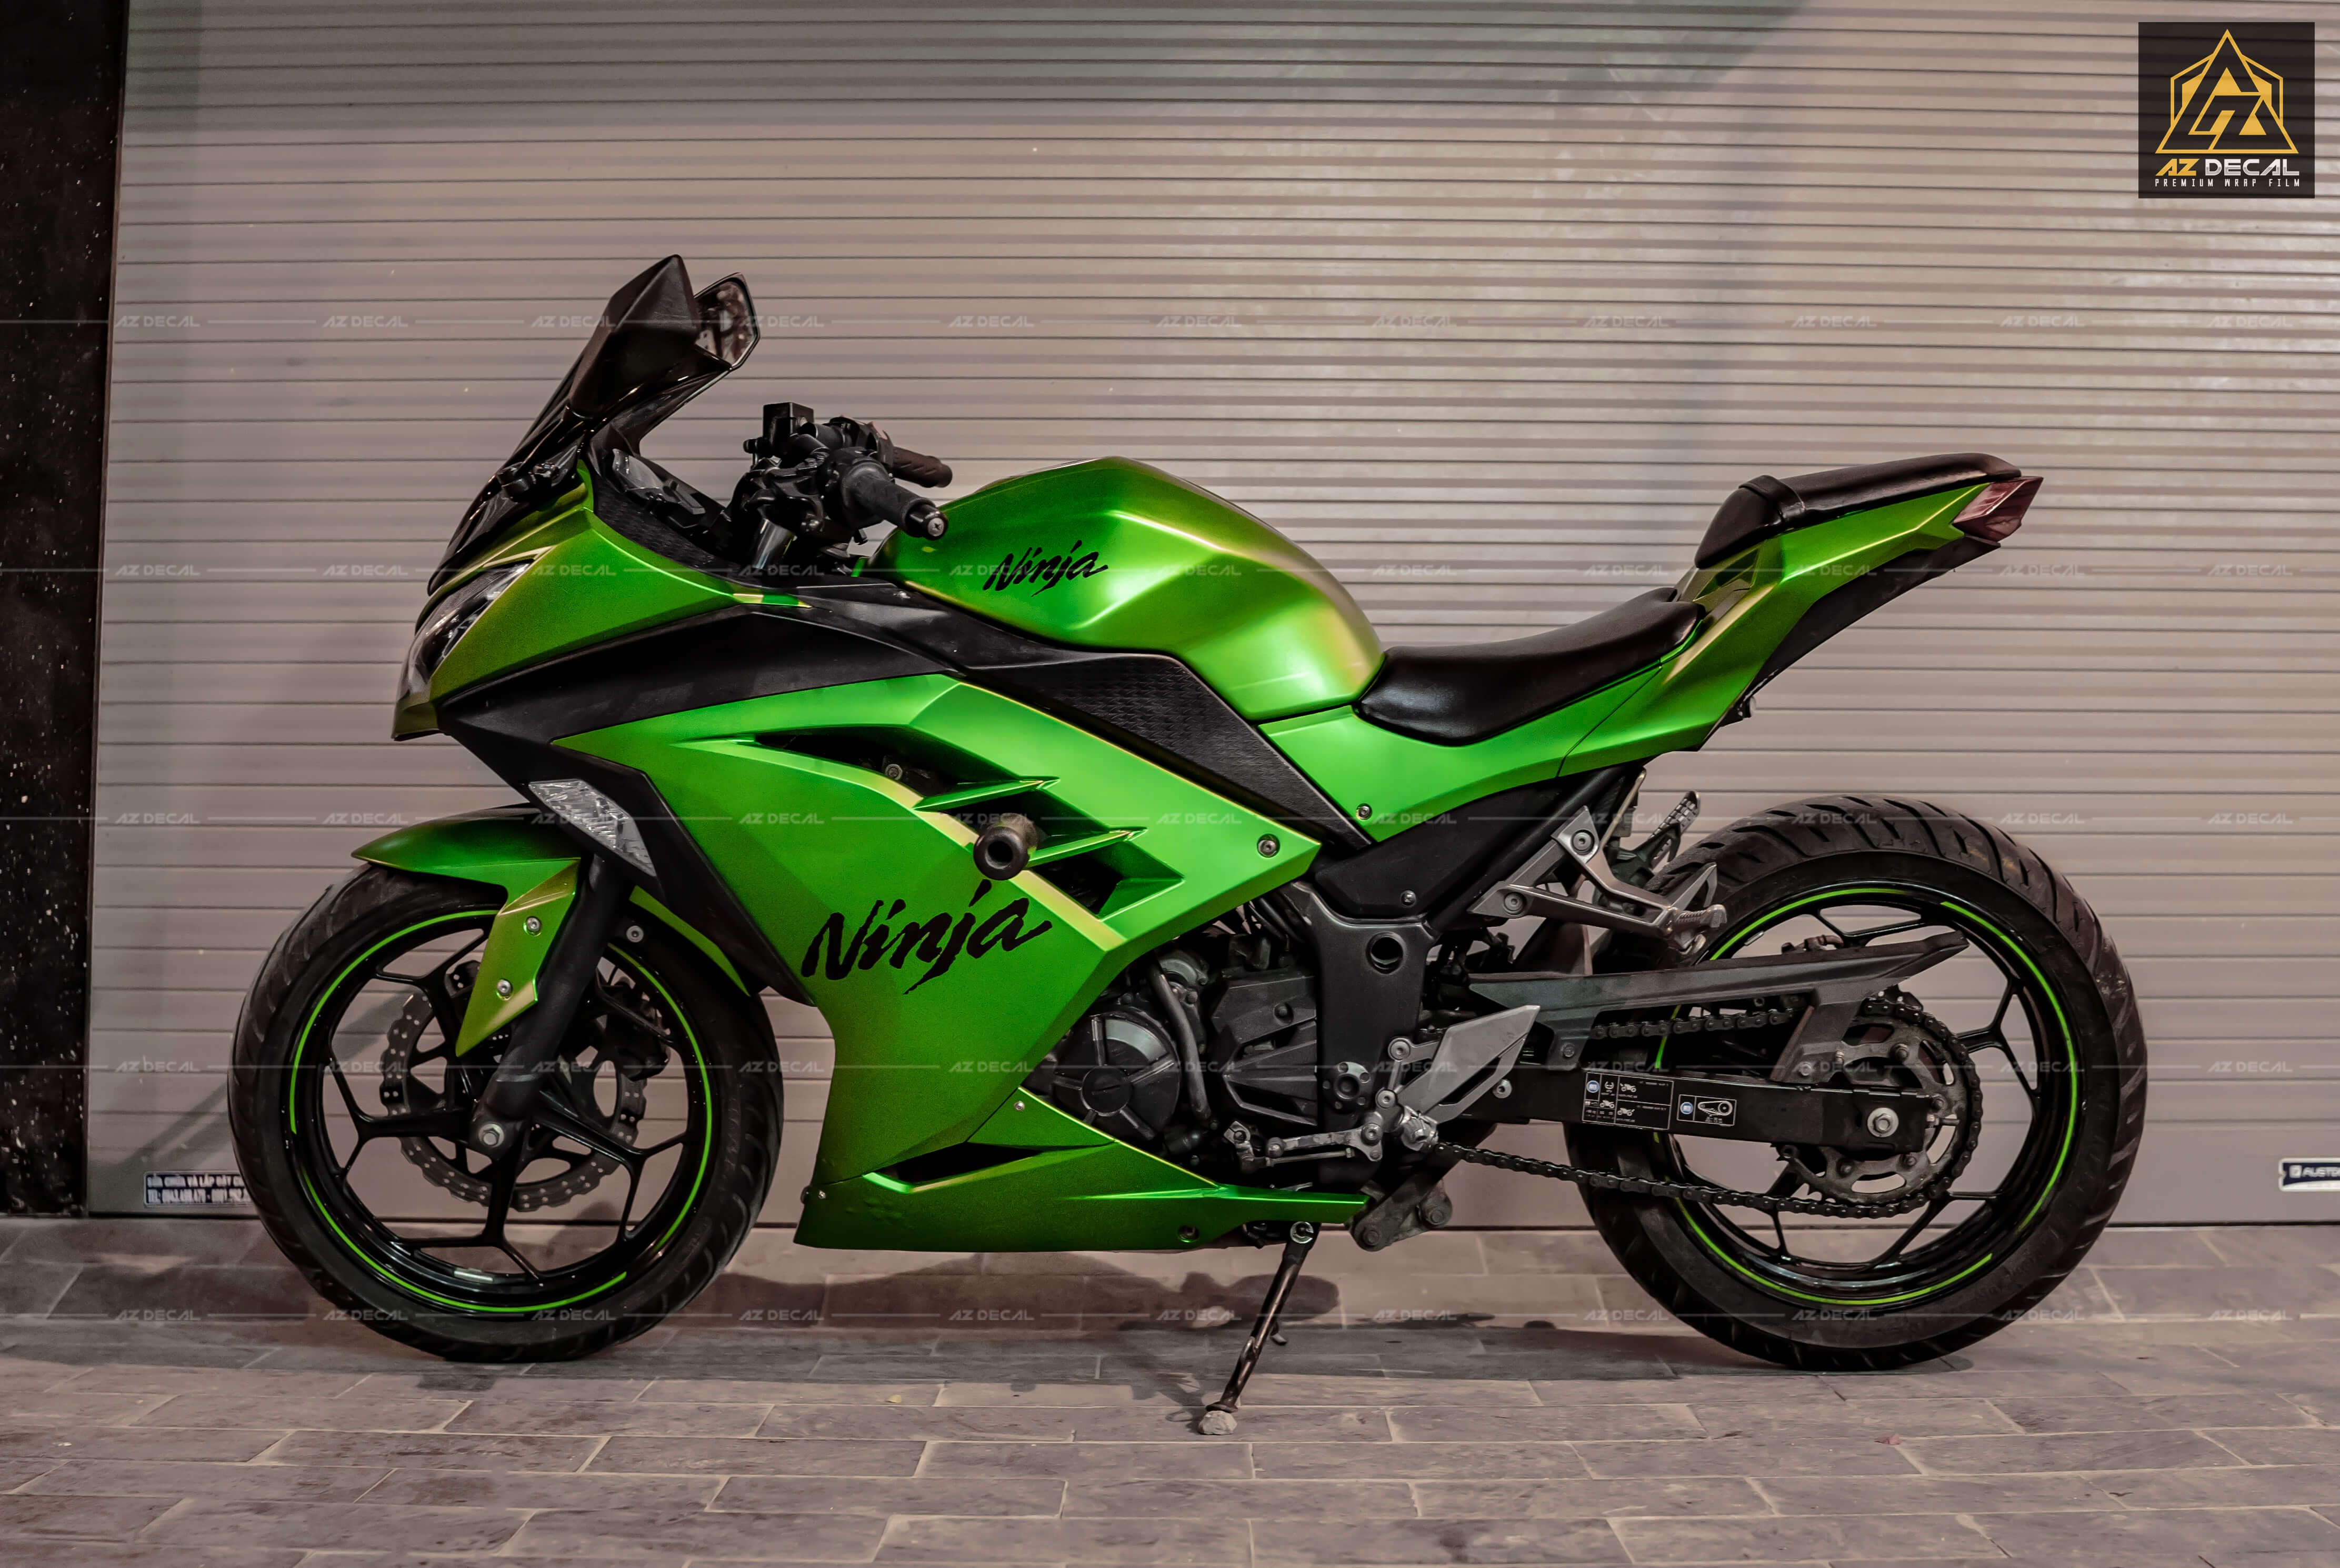 Kawasaki Ninja 300 dán đổi màu màu xanh lá cây